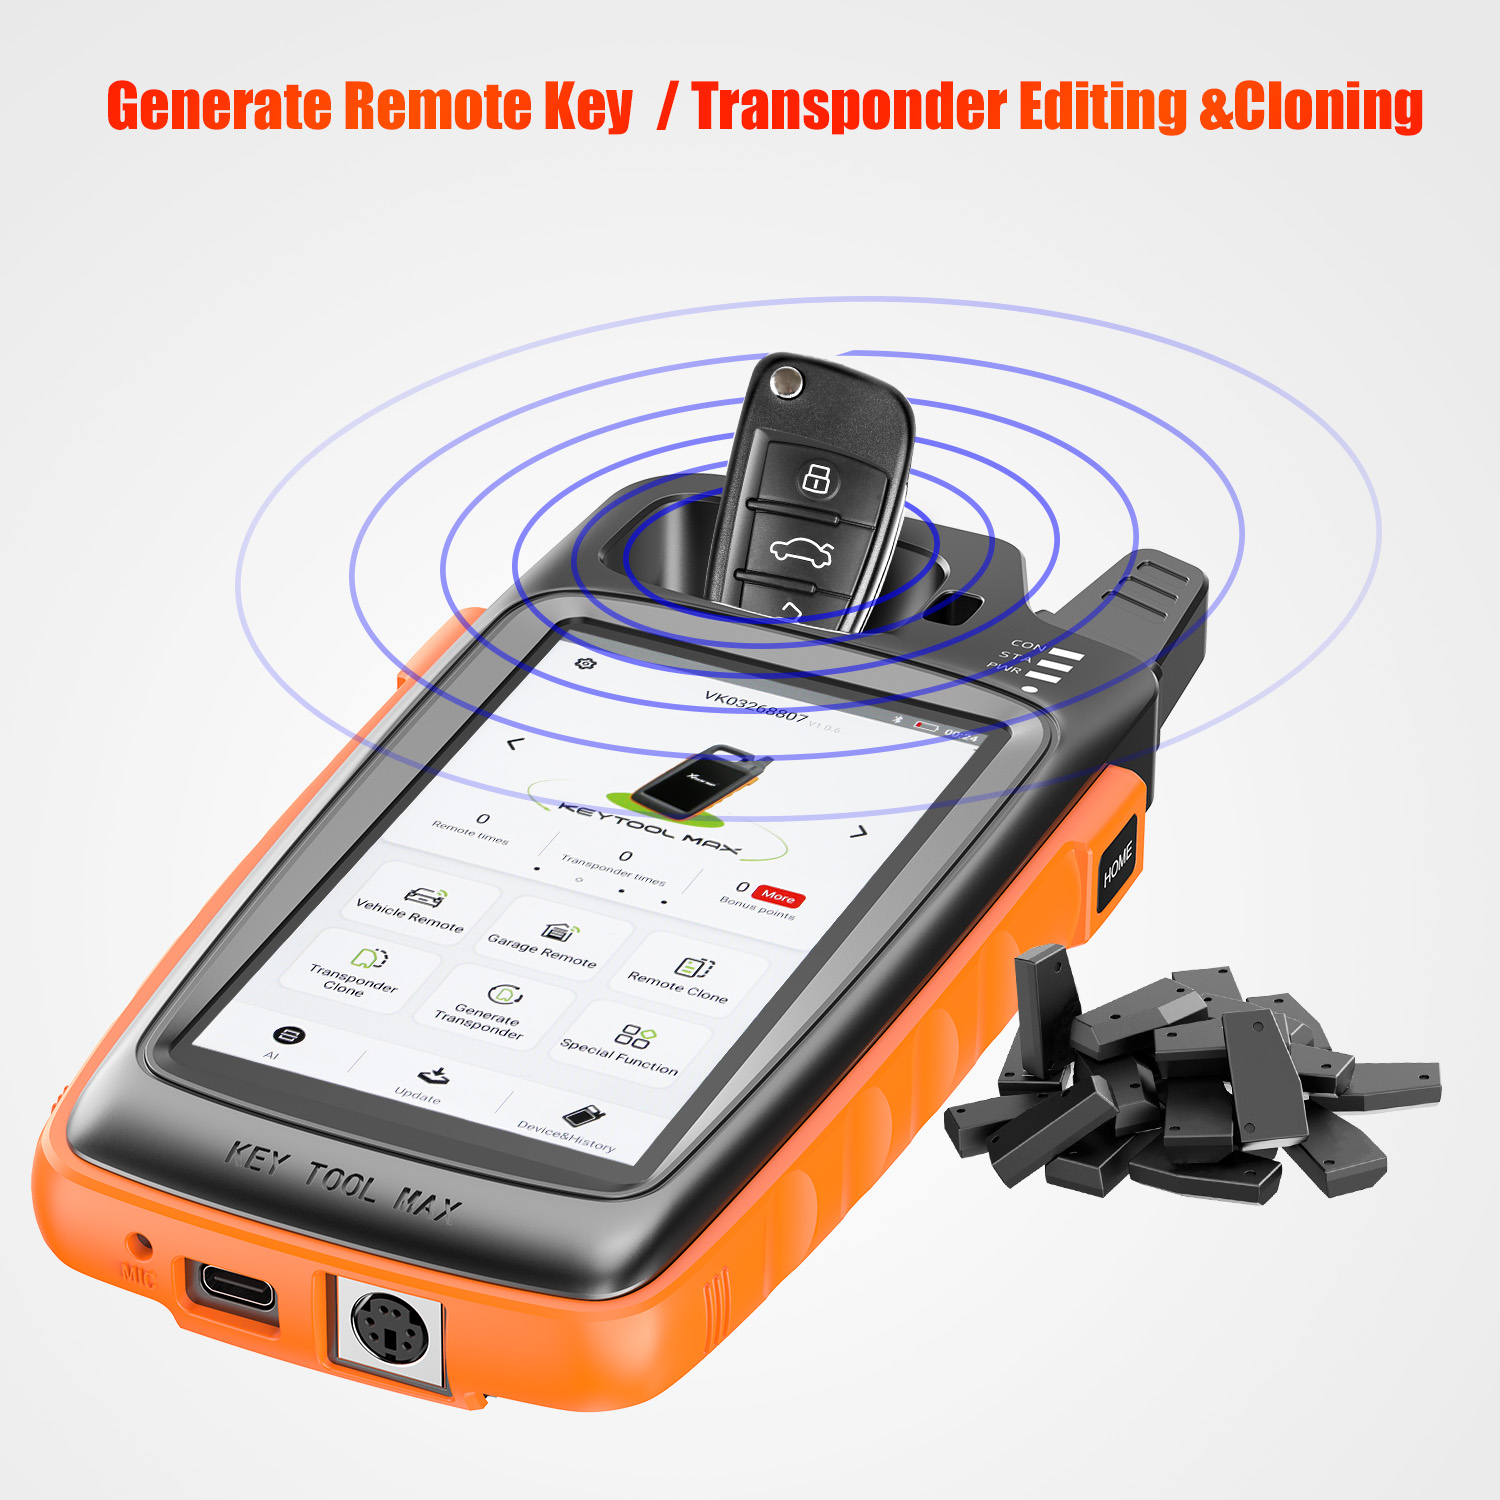 XHORSE KEY TOOL MAX Generate Remote Key Transponder Editing Cloning